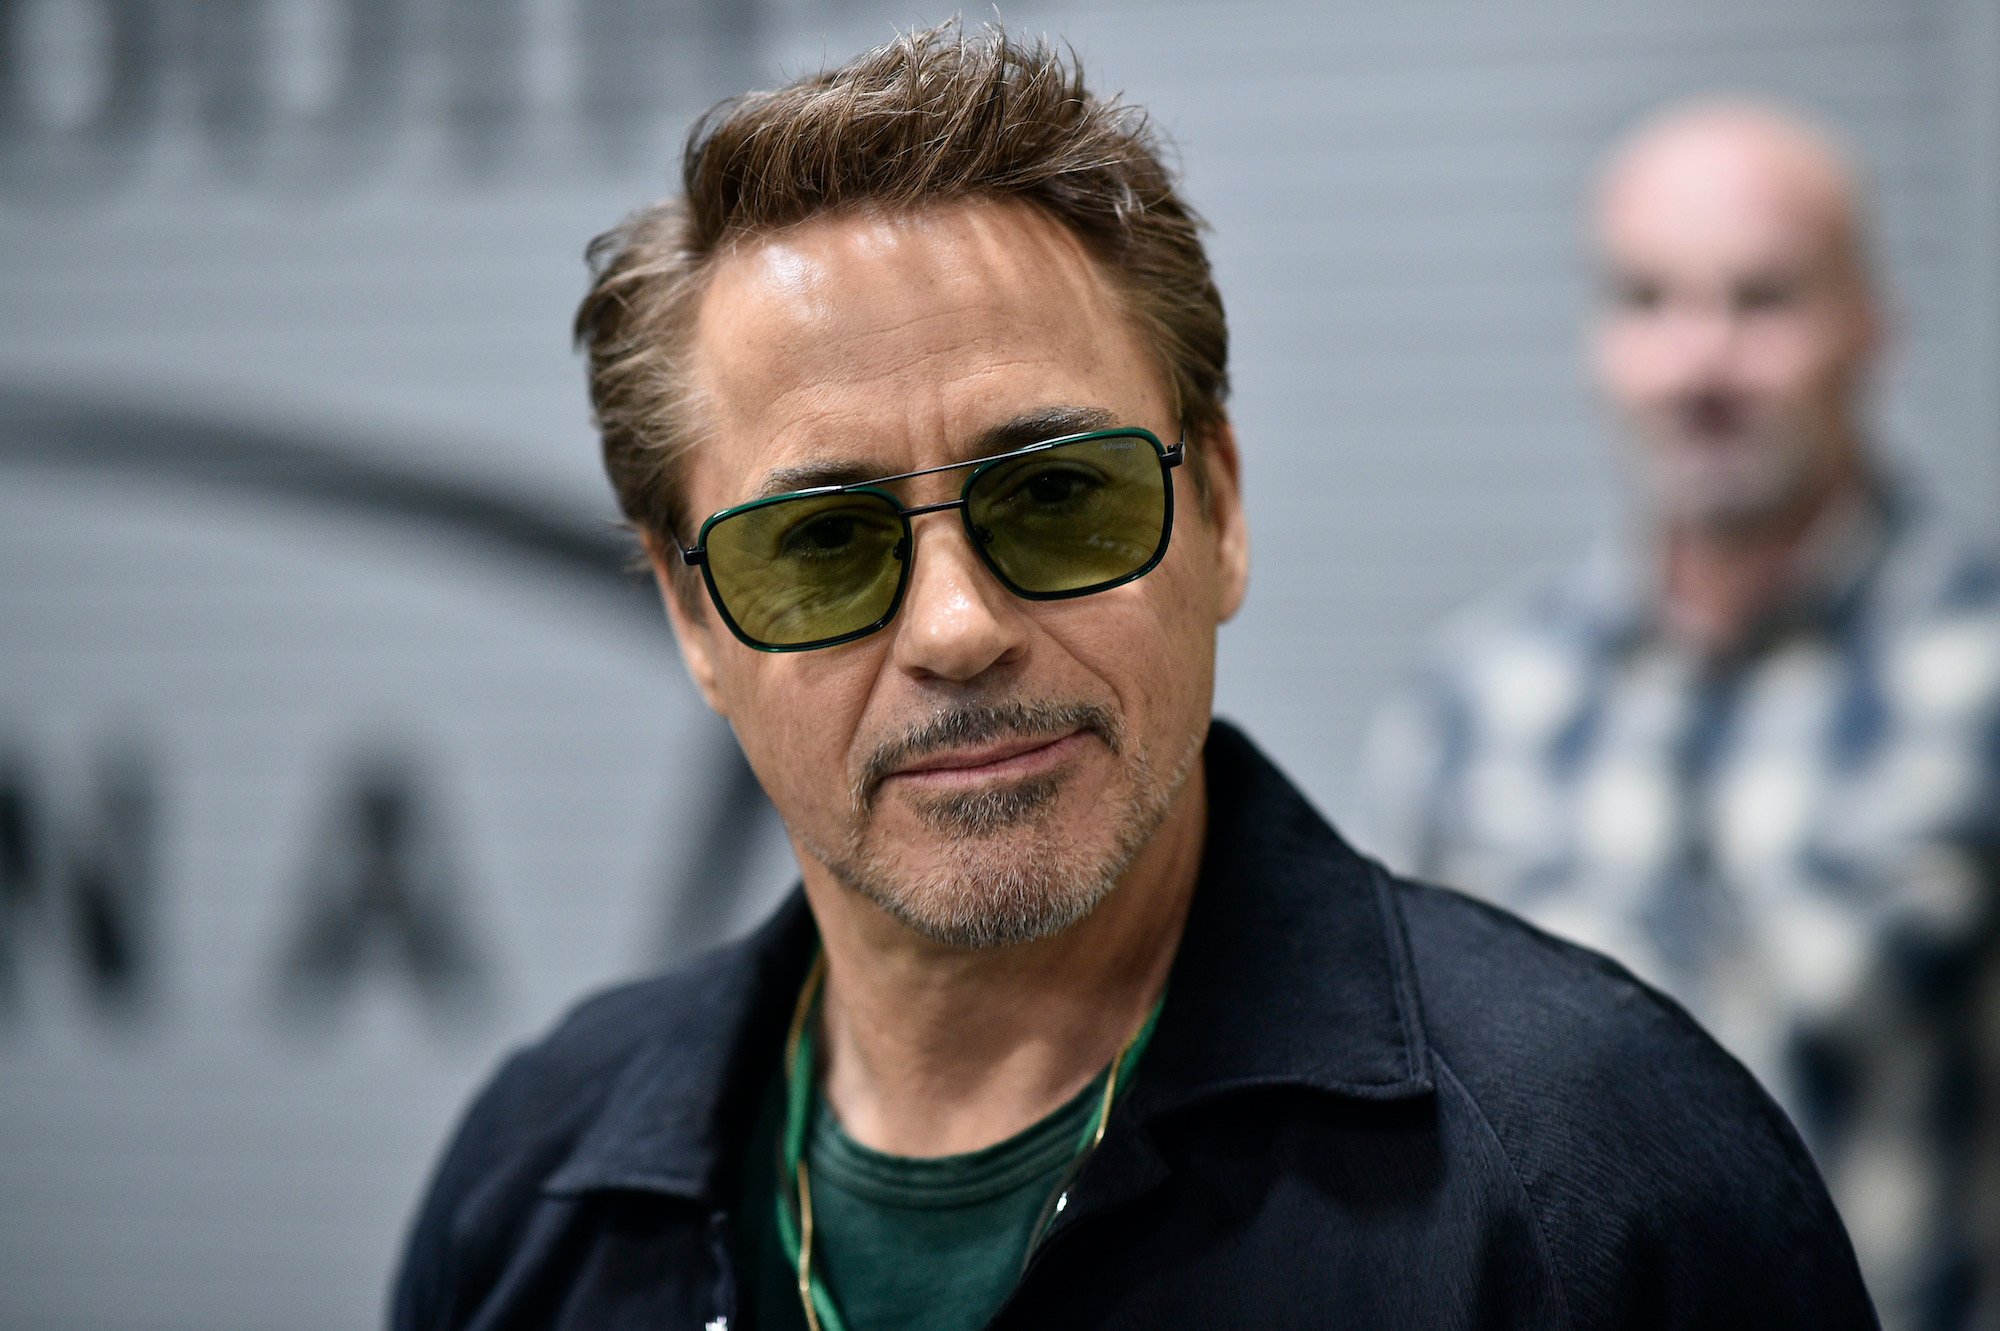 How Tall Is Iron Man Actor Robert Downey Jr.?